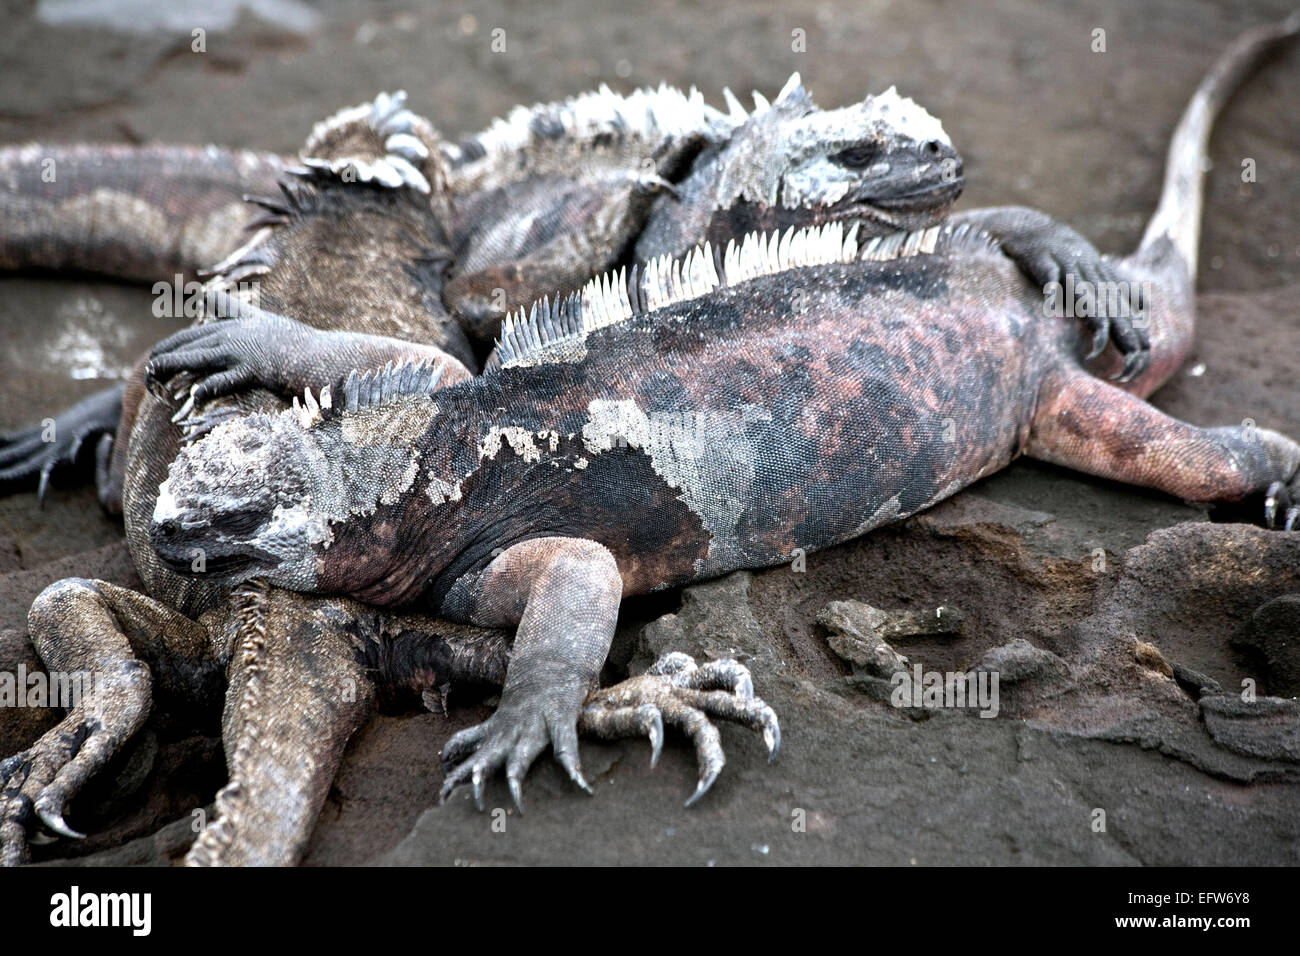 Group of marine iguanas Galapagos Islands Stock Photo